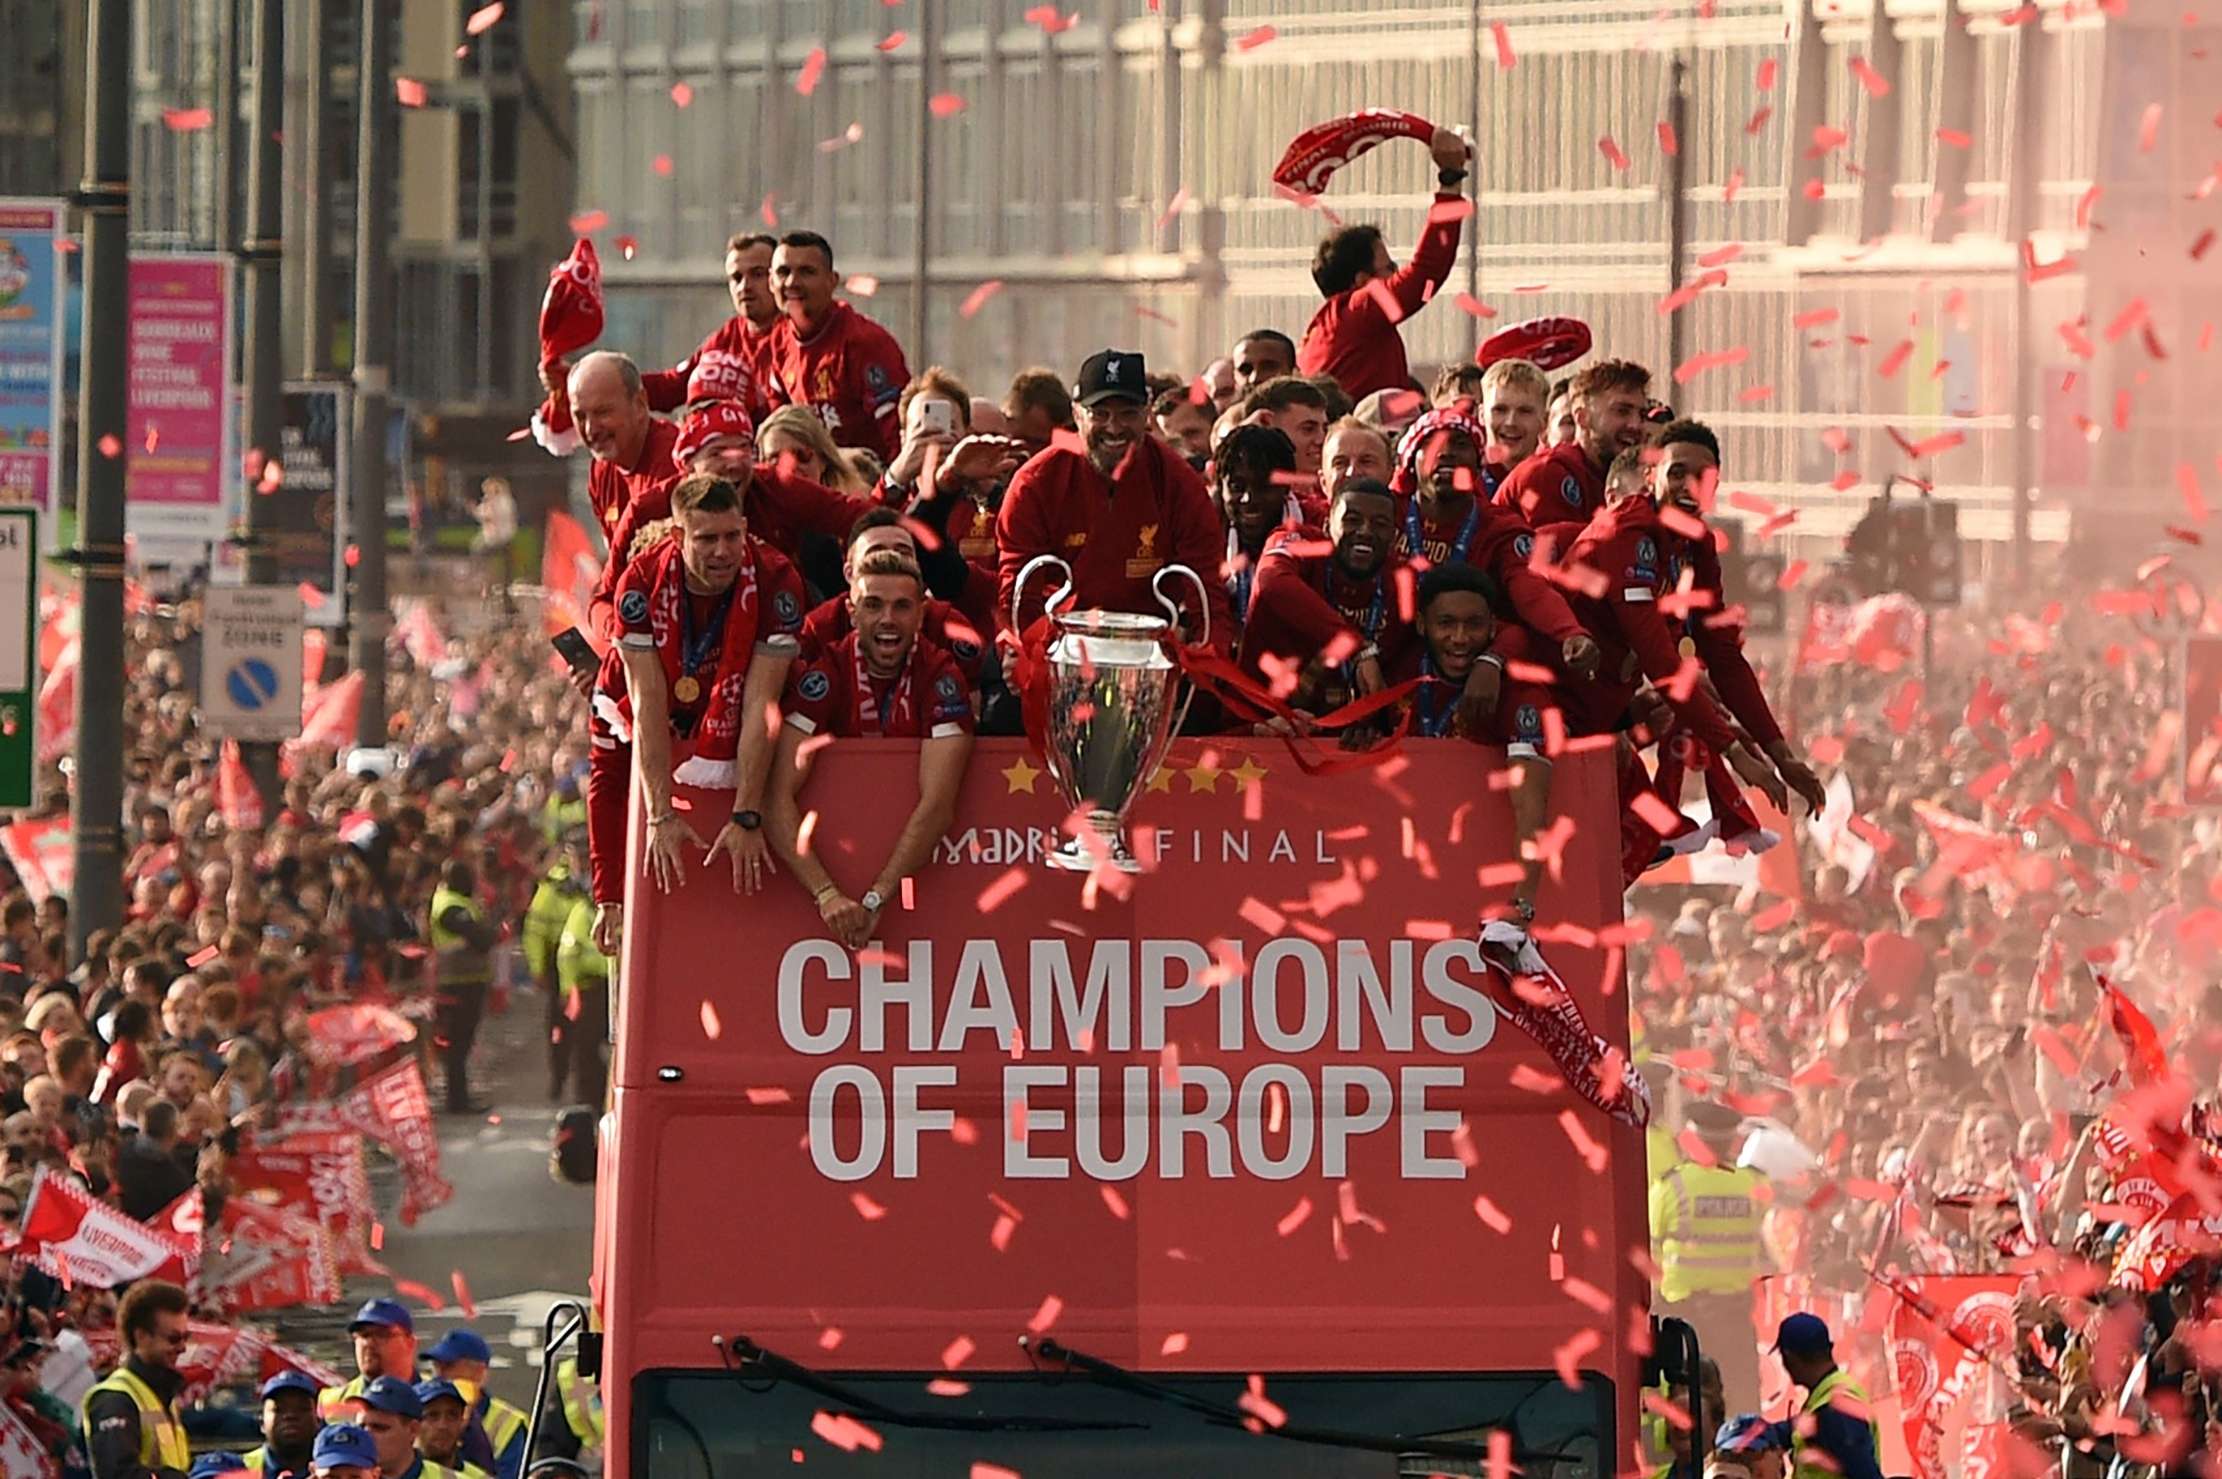 Liverpool Champions League 2018-19 trophy parade